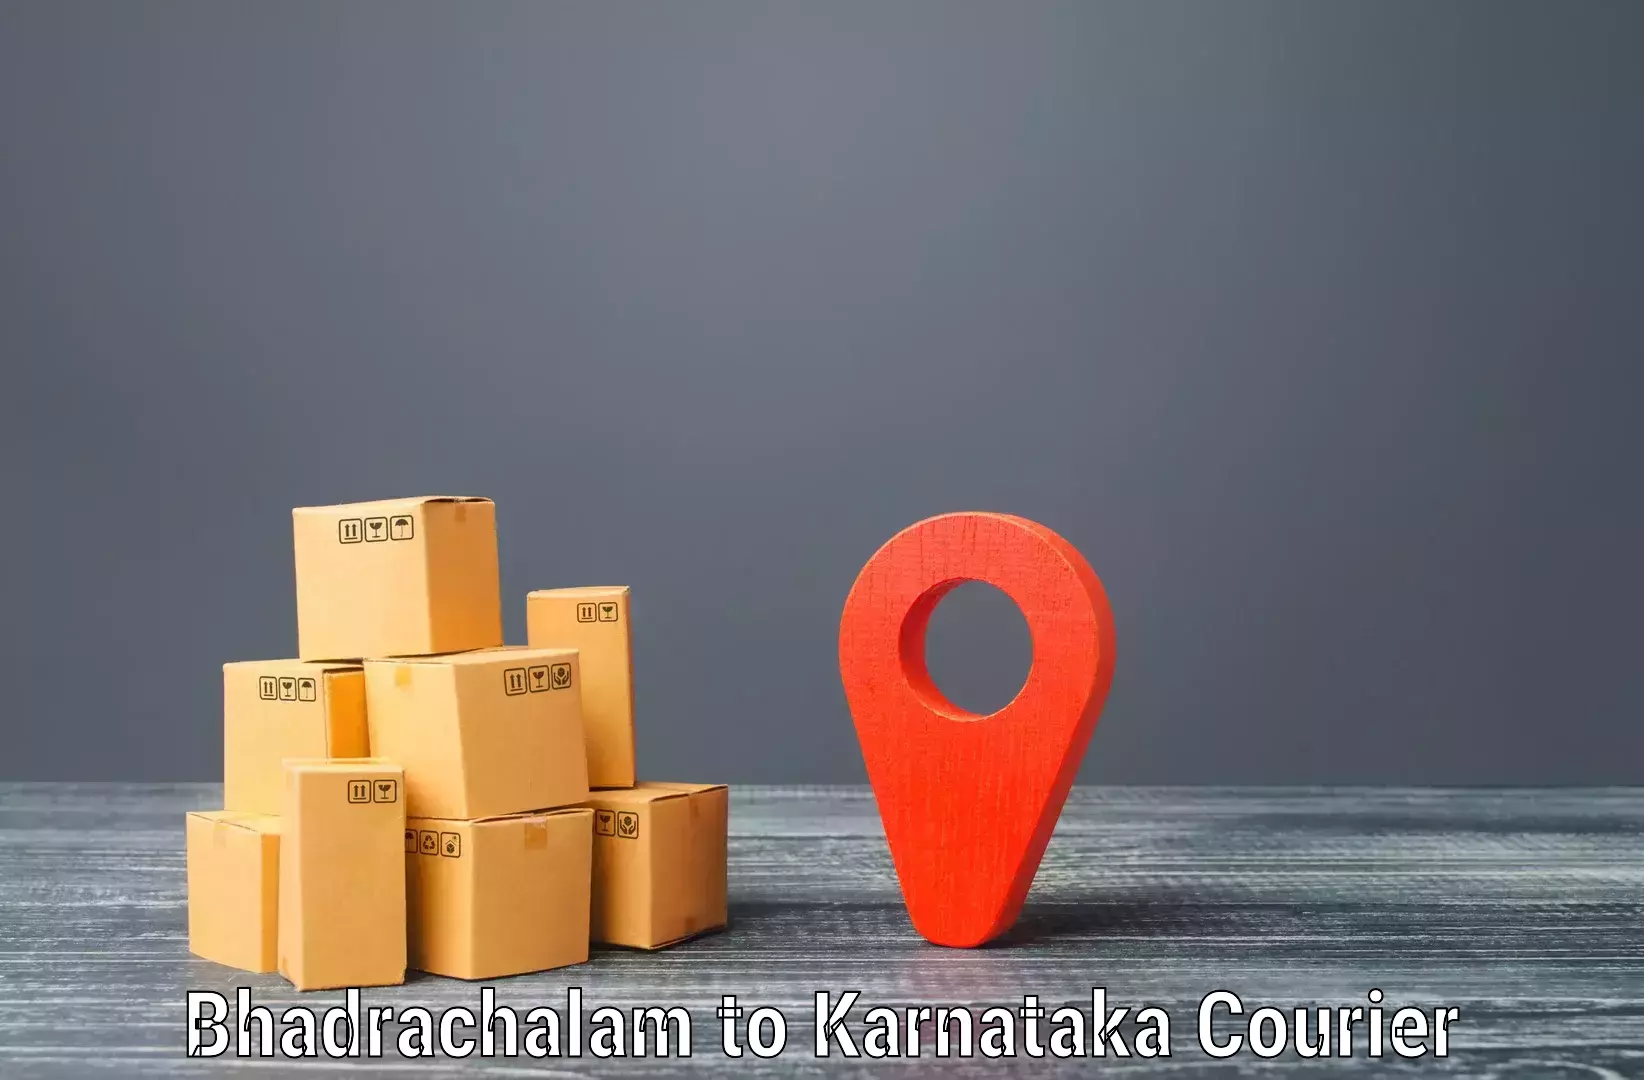 Next day courier in Bhadrachalam to Mandya